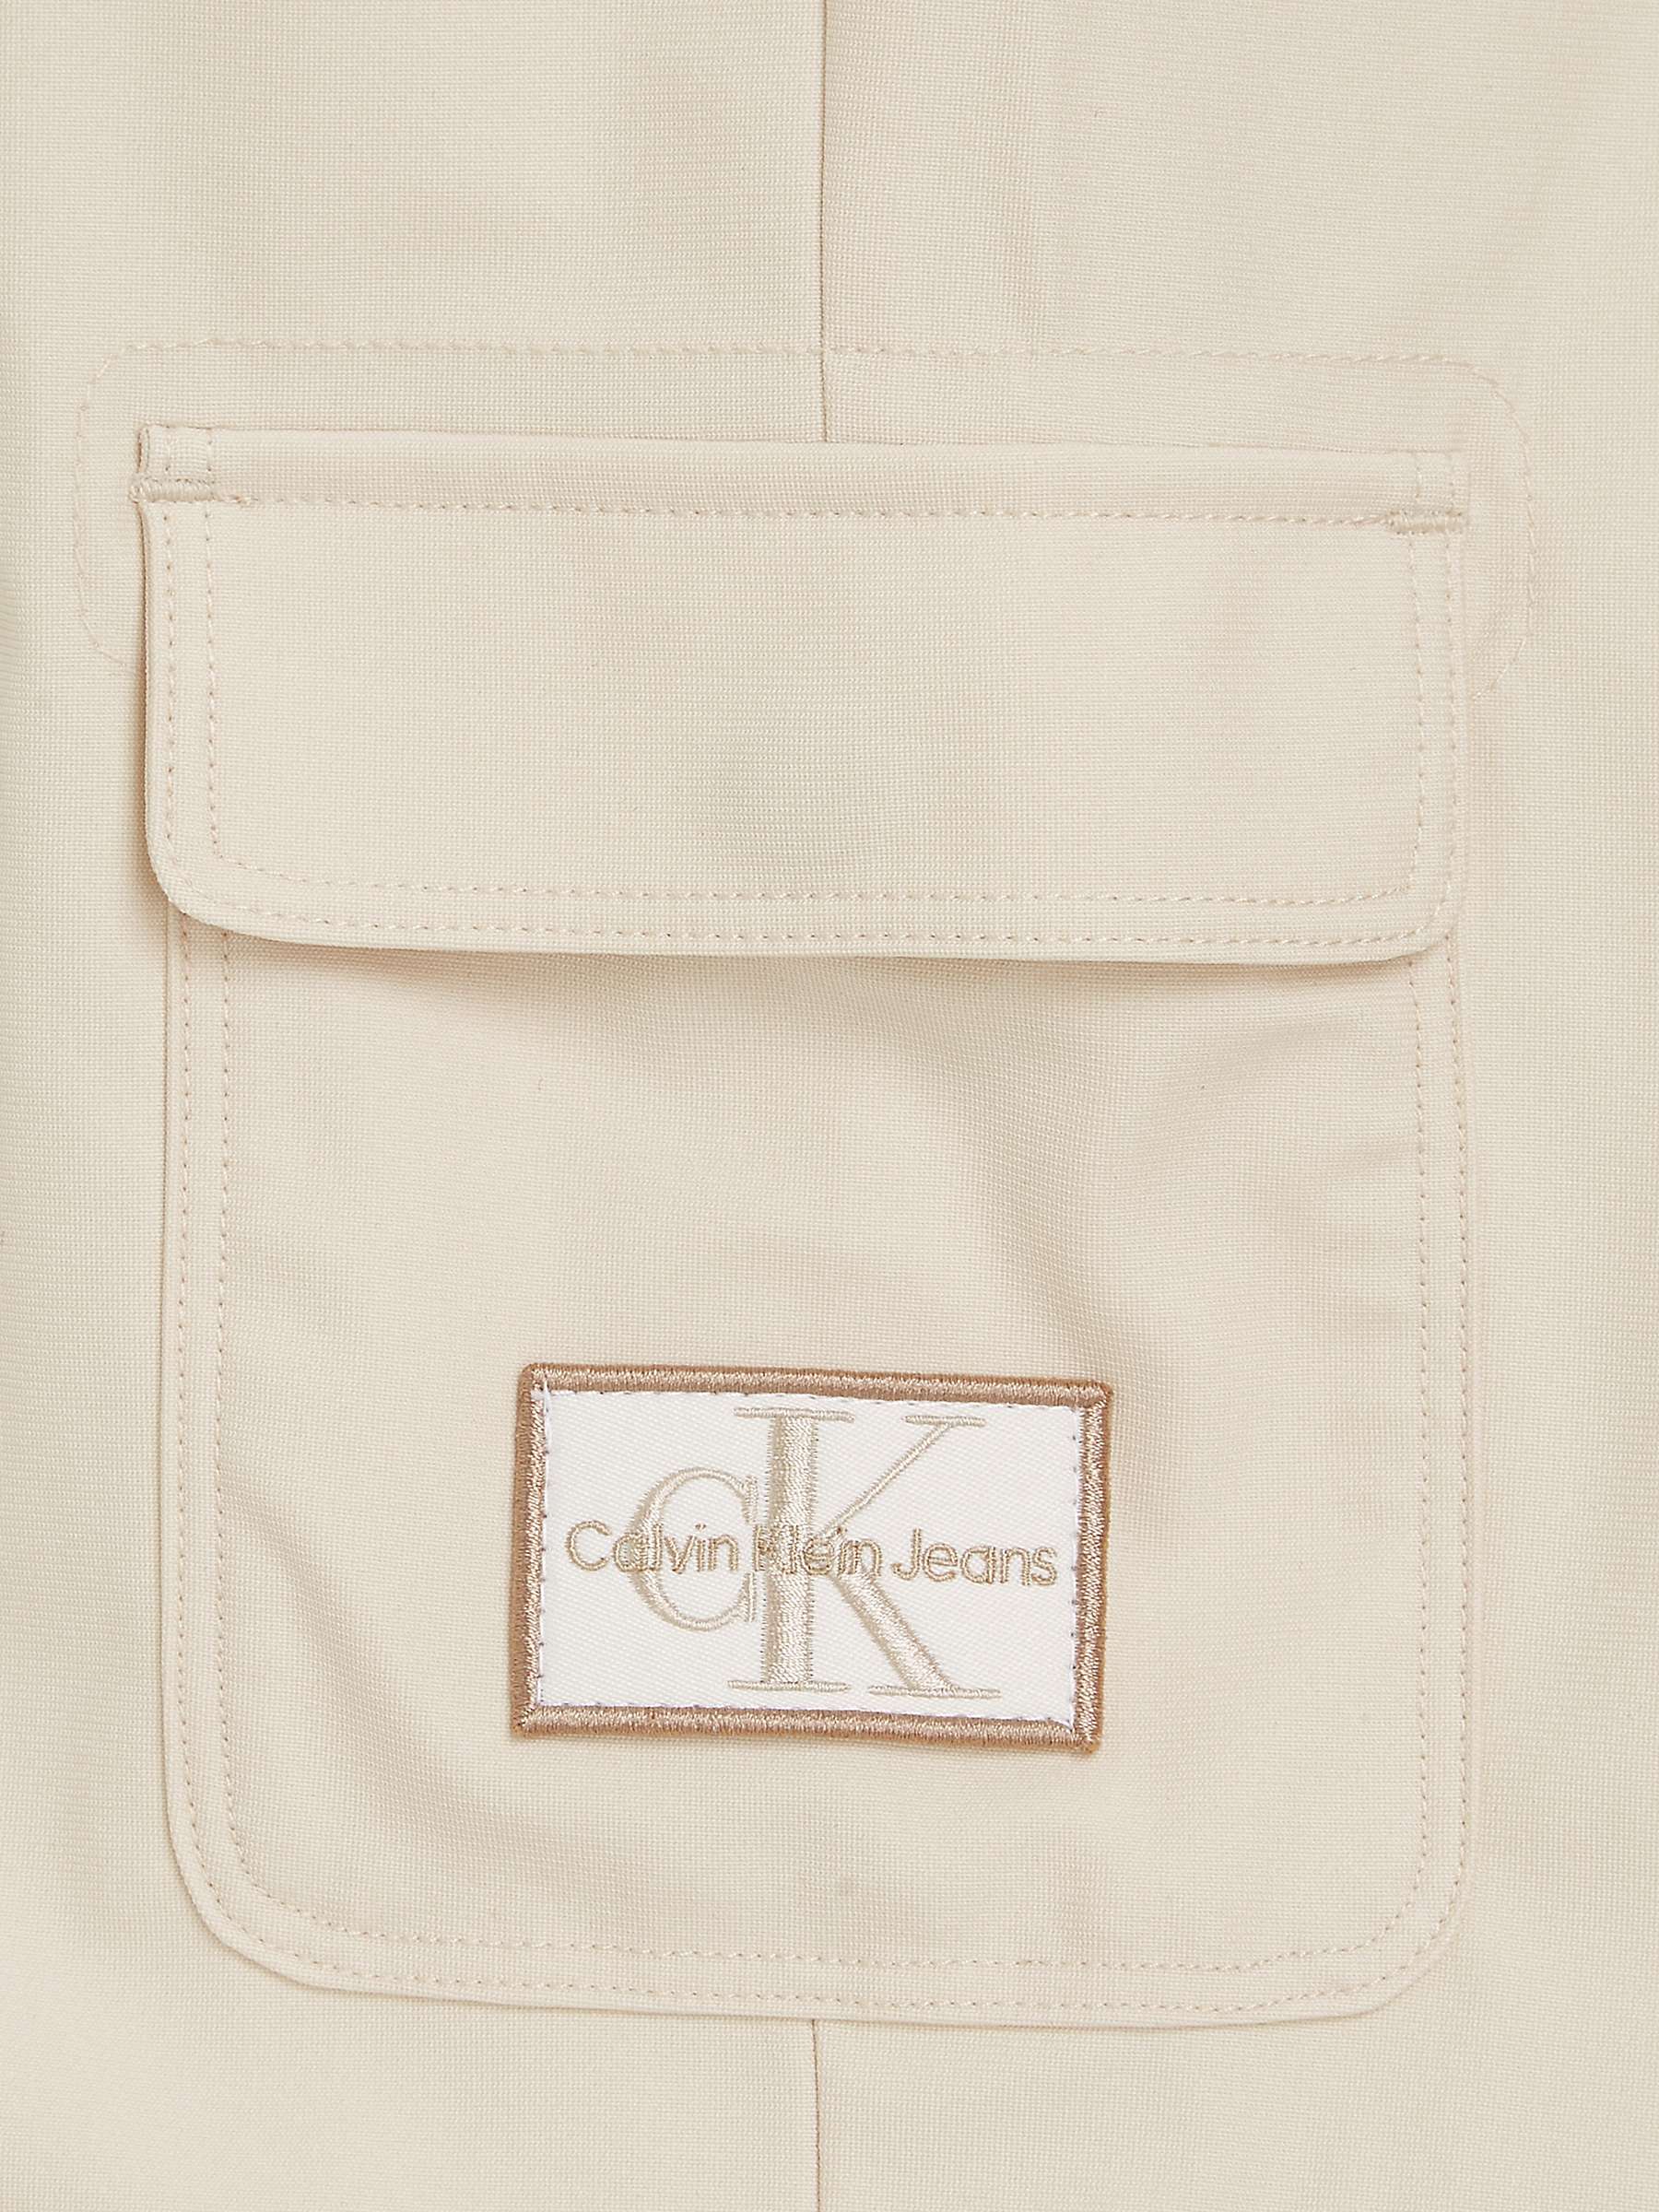 Buy Calvin Klein Jeans Kids' Parachute Trousers, Whitecap Gray Online at johnlewis.com